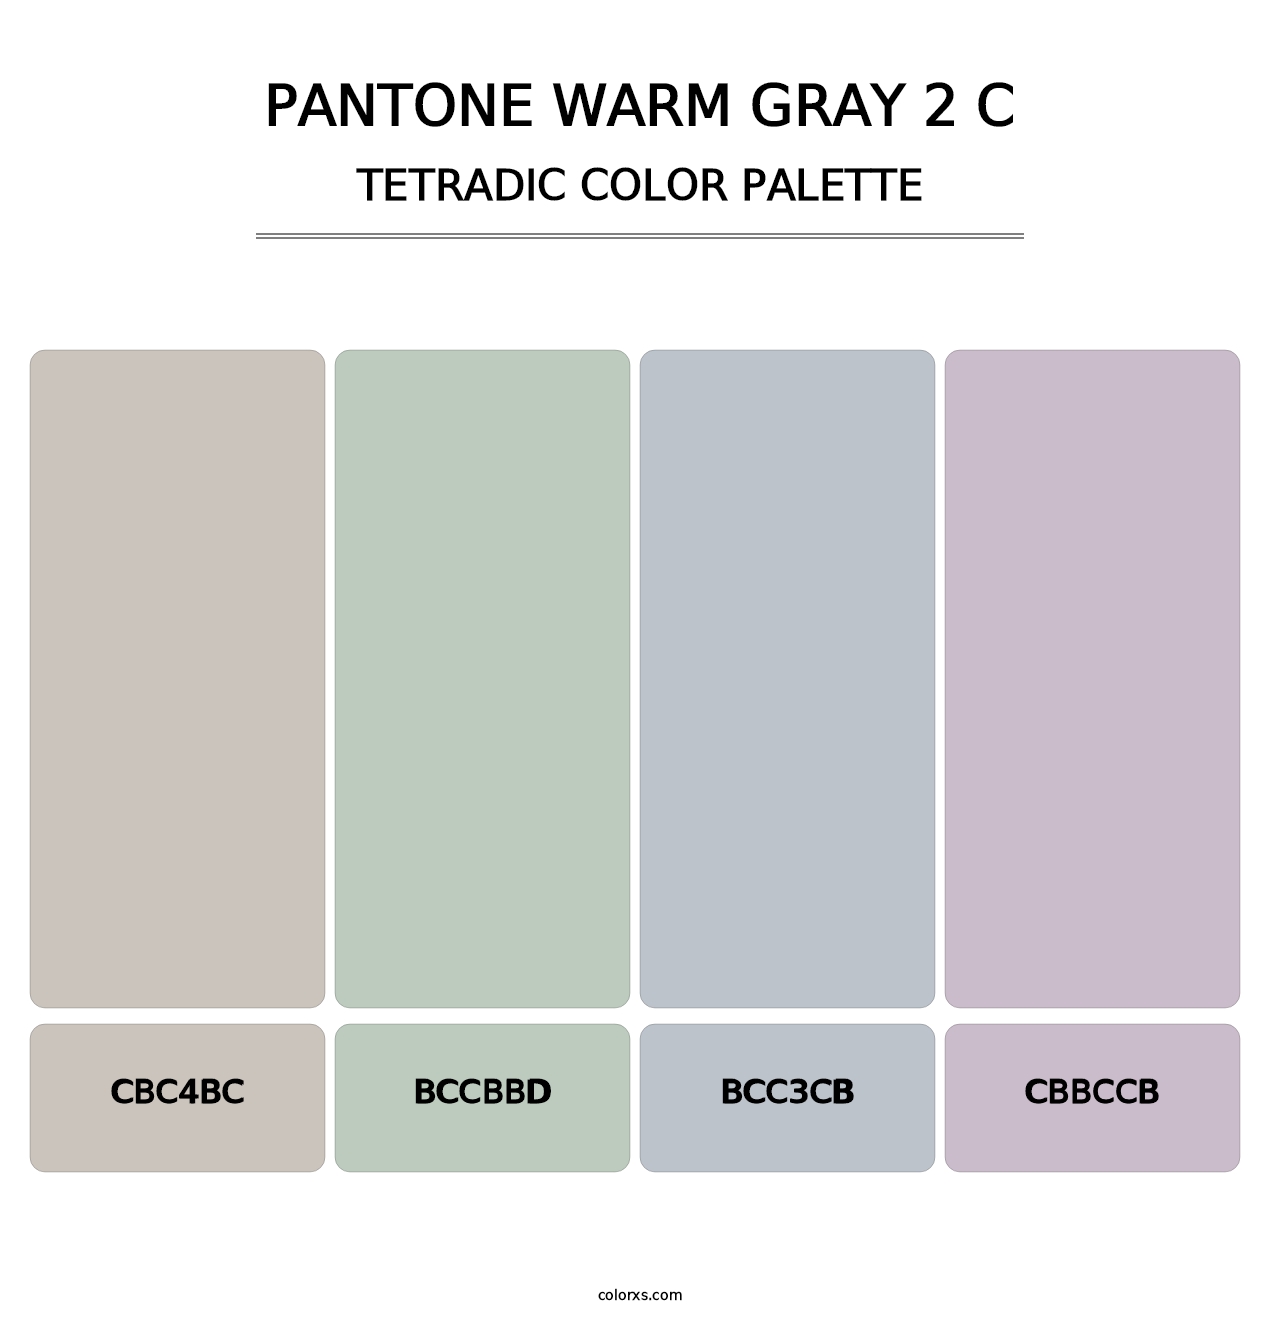 PANTONE Warm Gray 2 C - Tetradic Color Palette